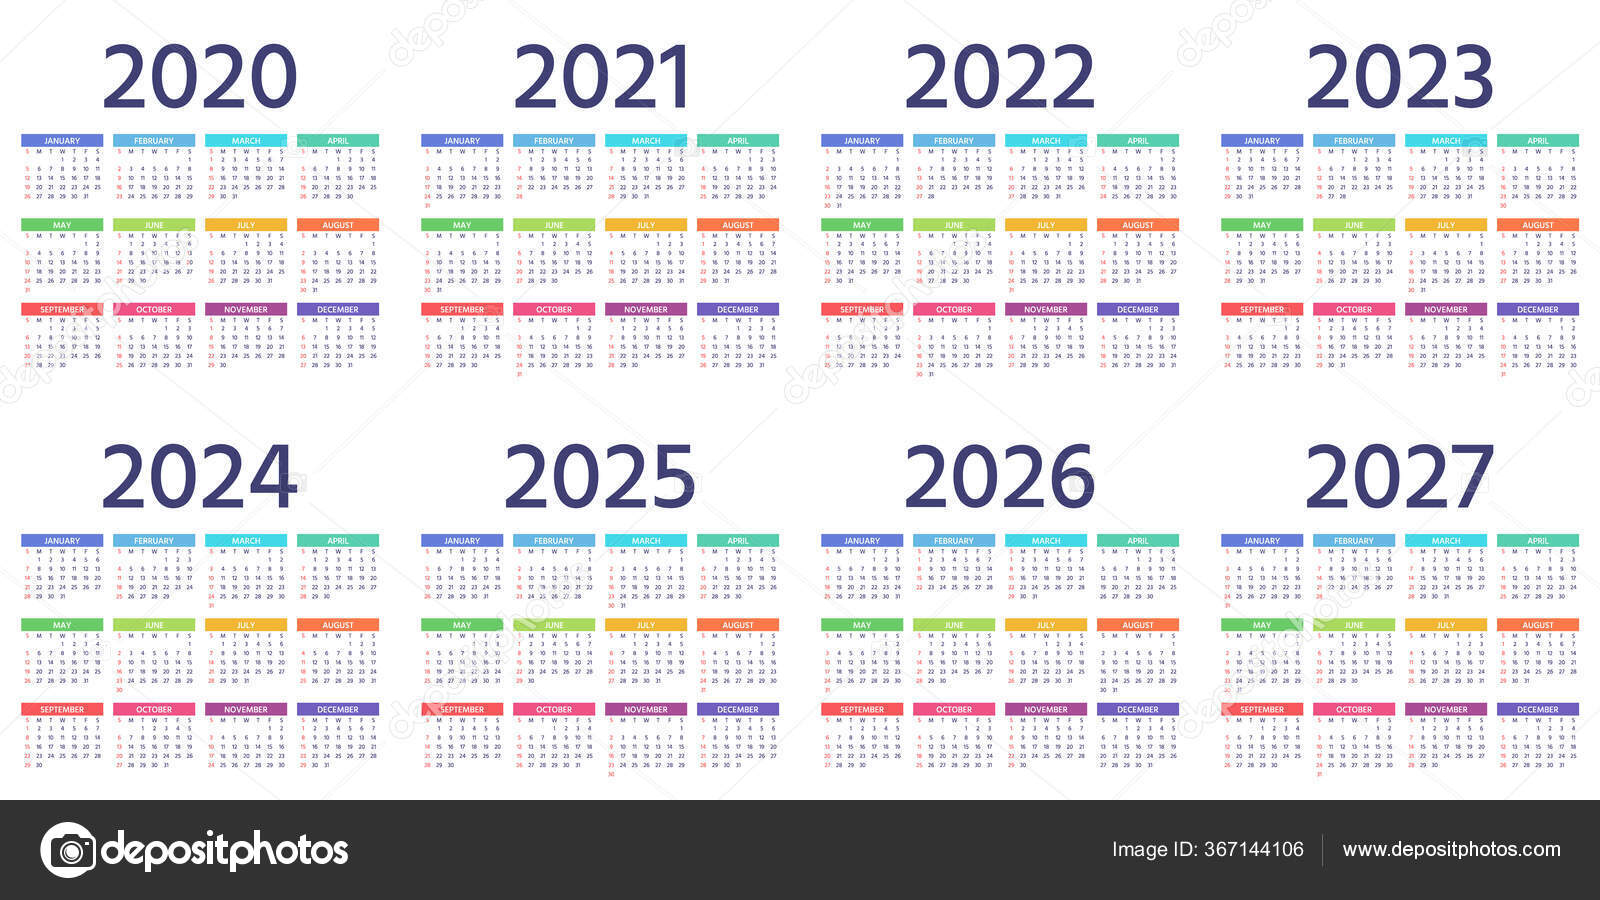 Calendar 2021 - 2025 : Calendar 2021 2022 2023 2024 2025 206 2027 2028 ...